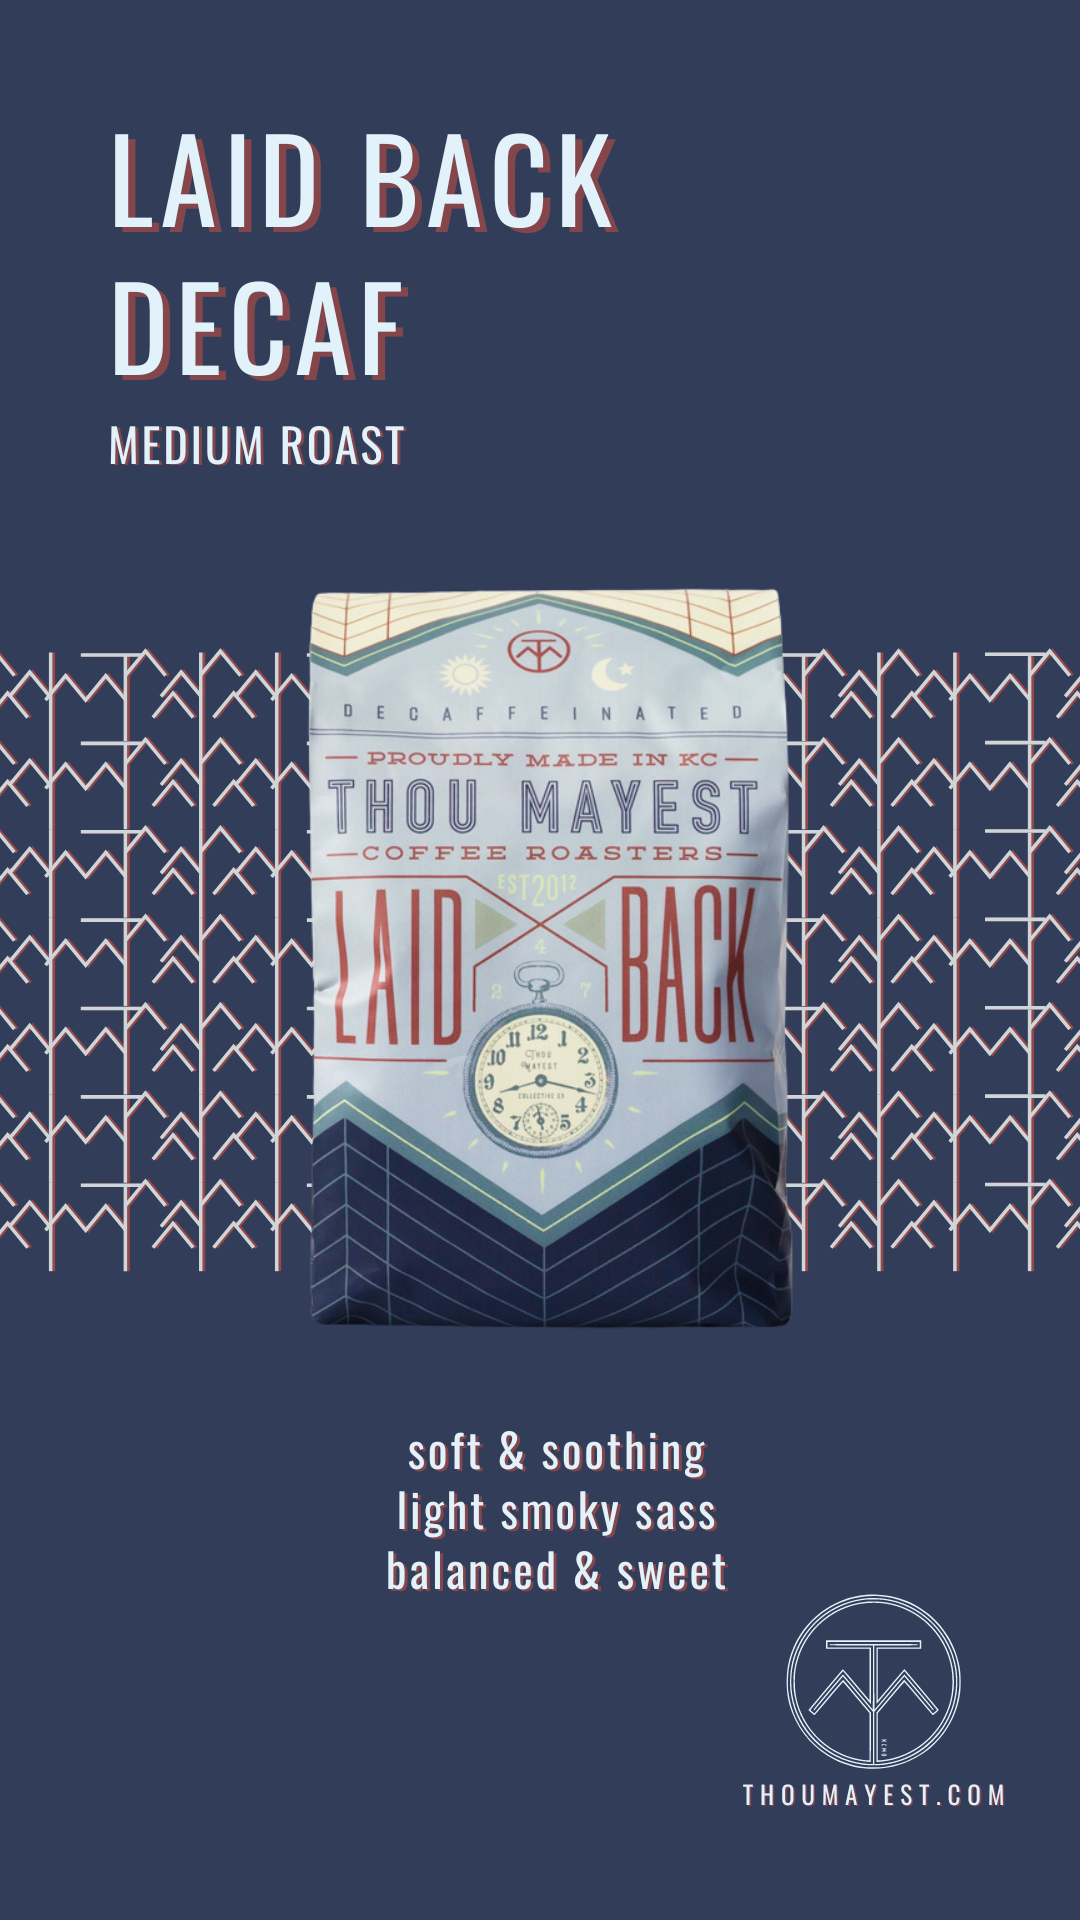 Image of Laid Back Decaf 12oz bag of coffee with description: Medium roast. Soft &amp; Soothing. Light, Smoky Sass. Balanced &amp; Sweet.